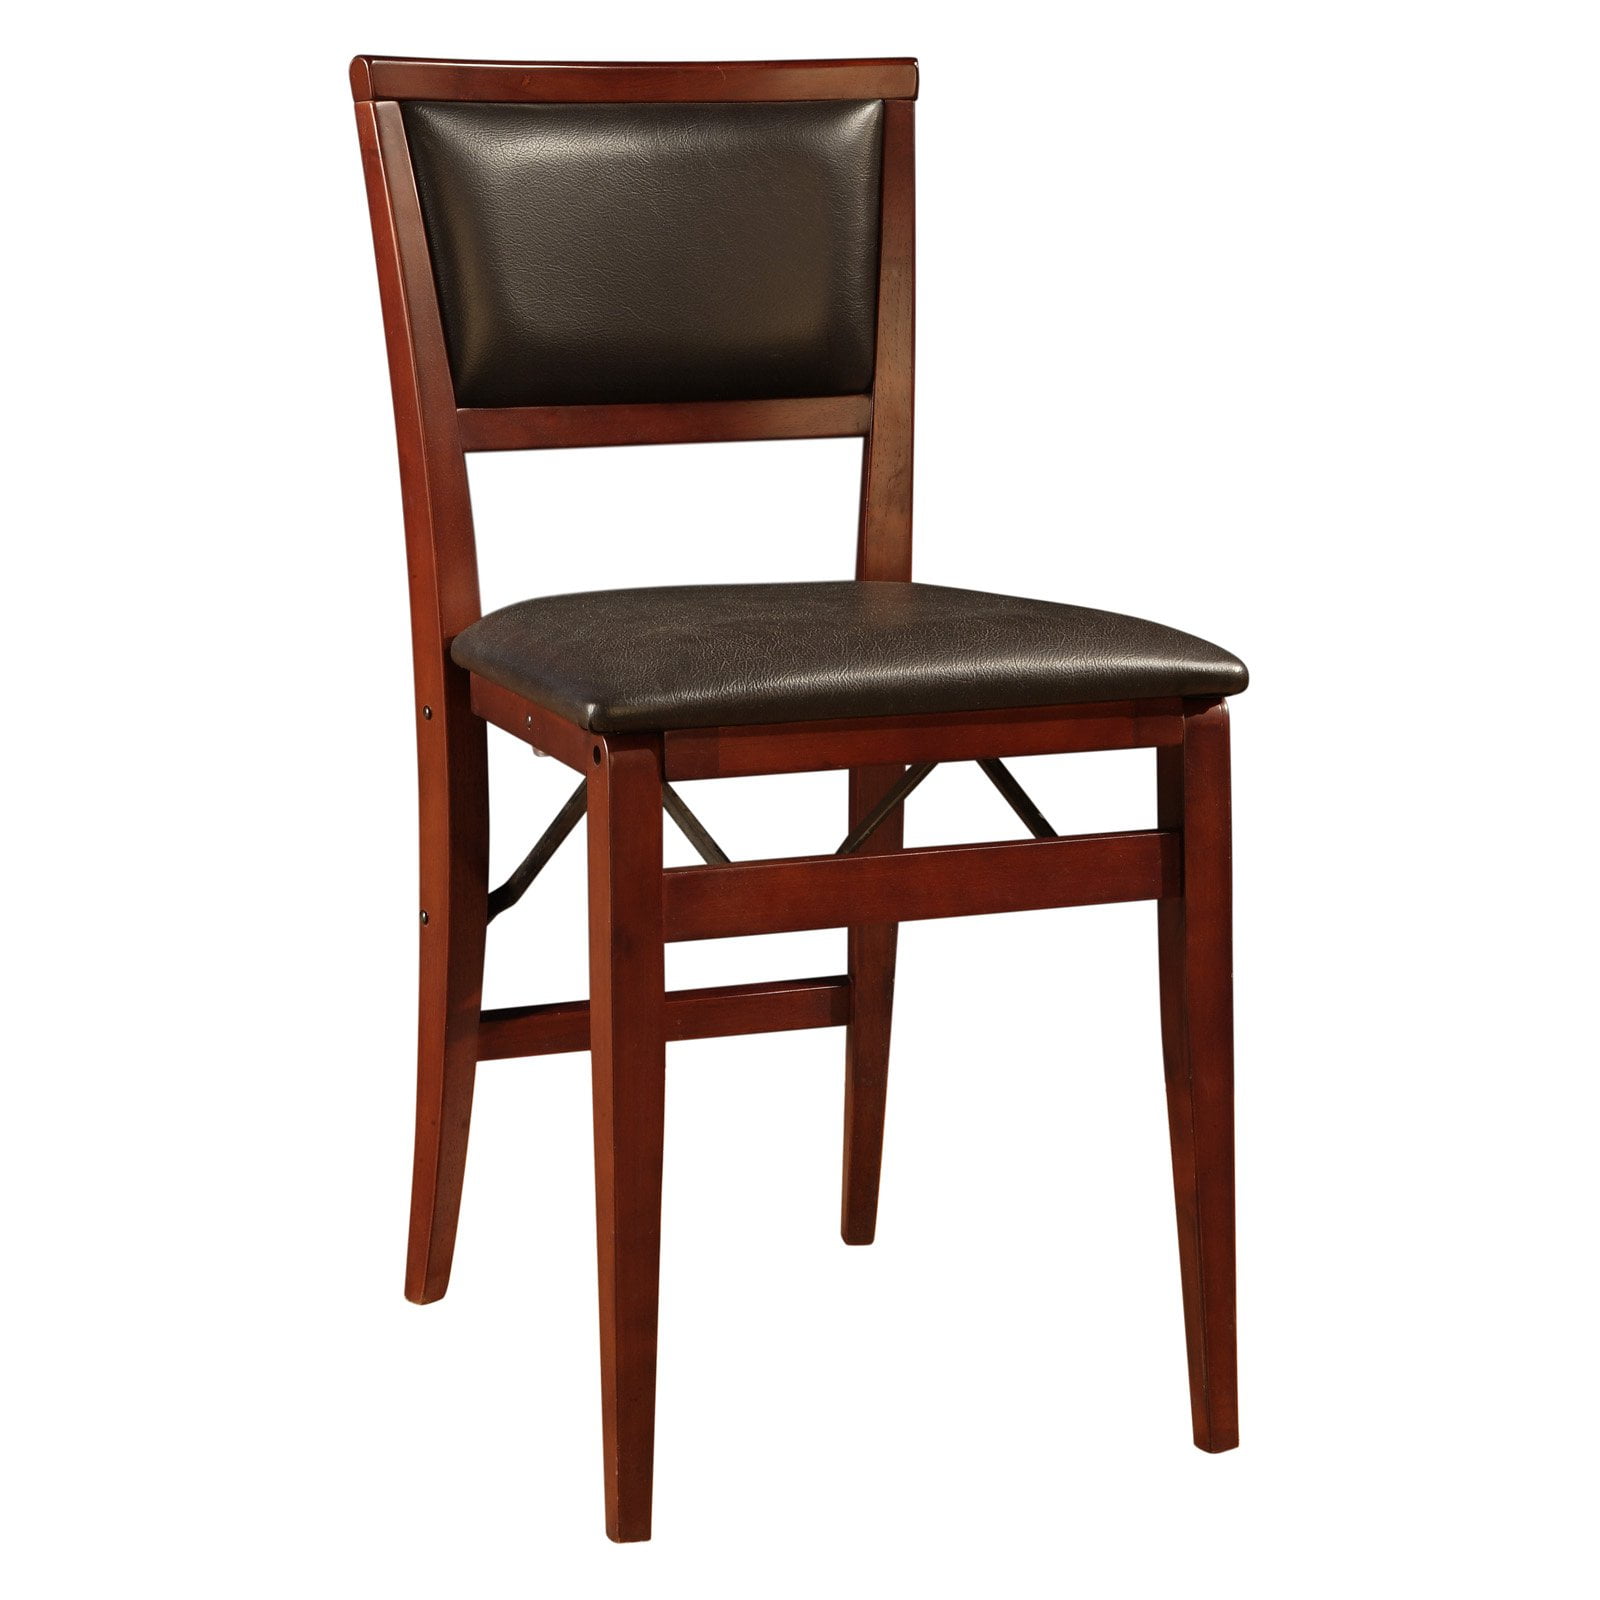 Linon Keira Padded Folding Dining Chairs - Set of 2 - Walmart.com